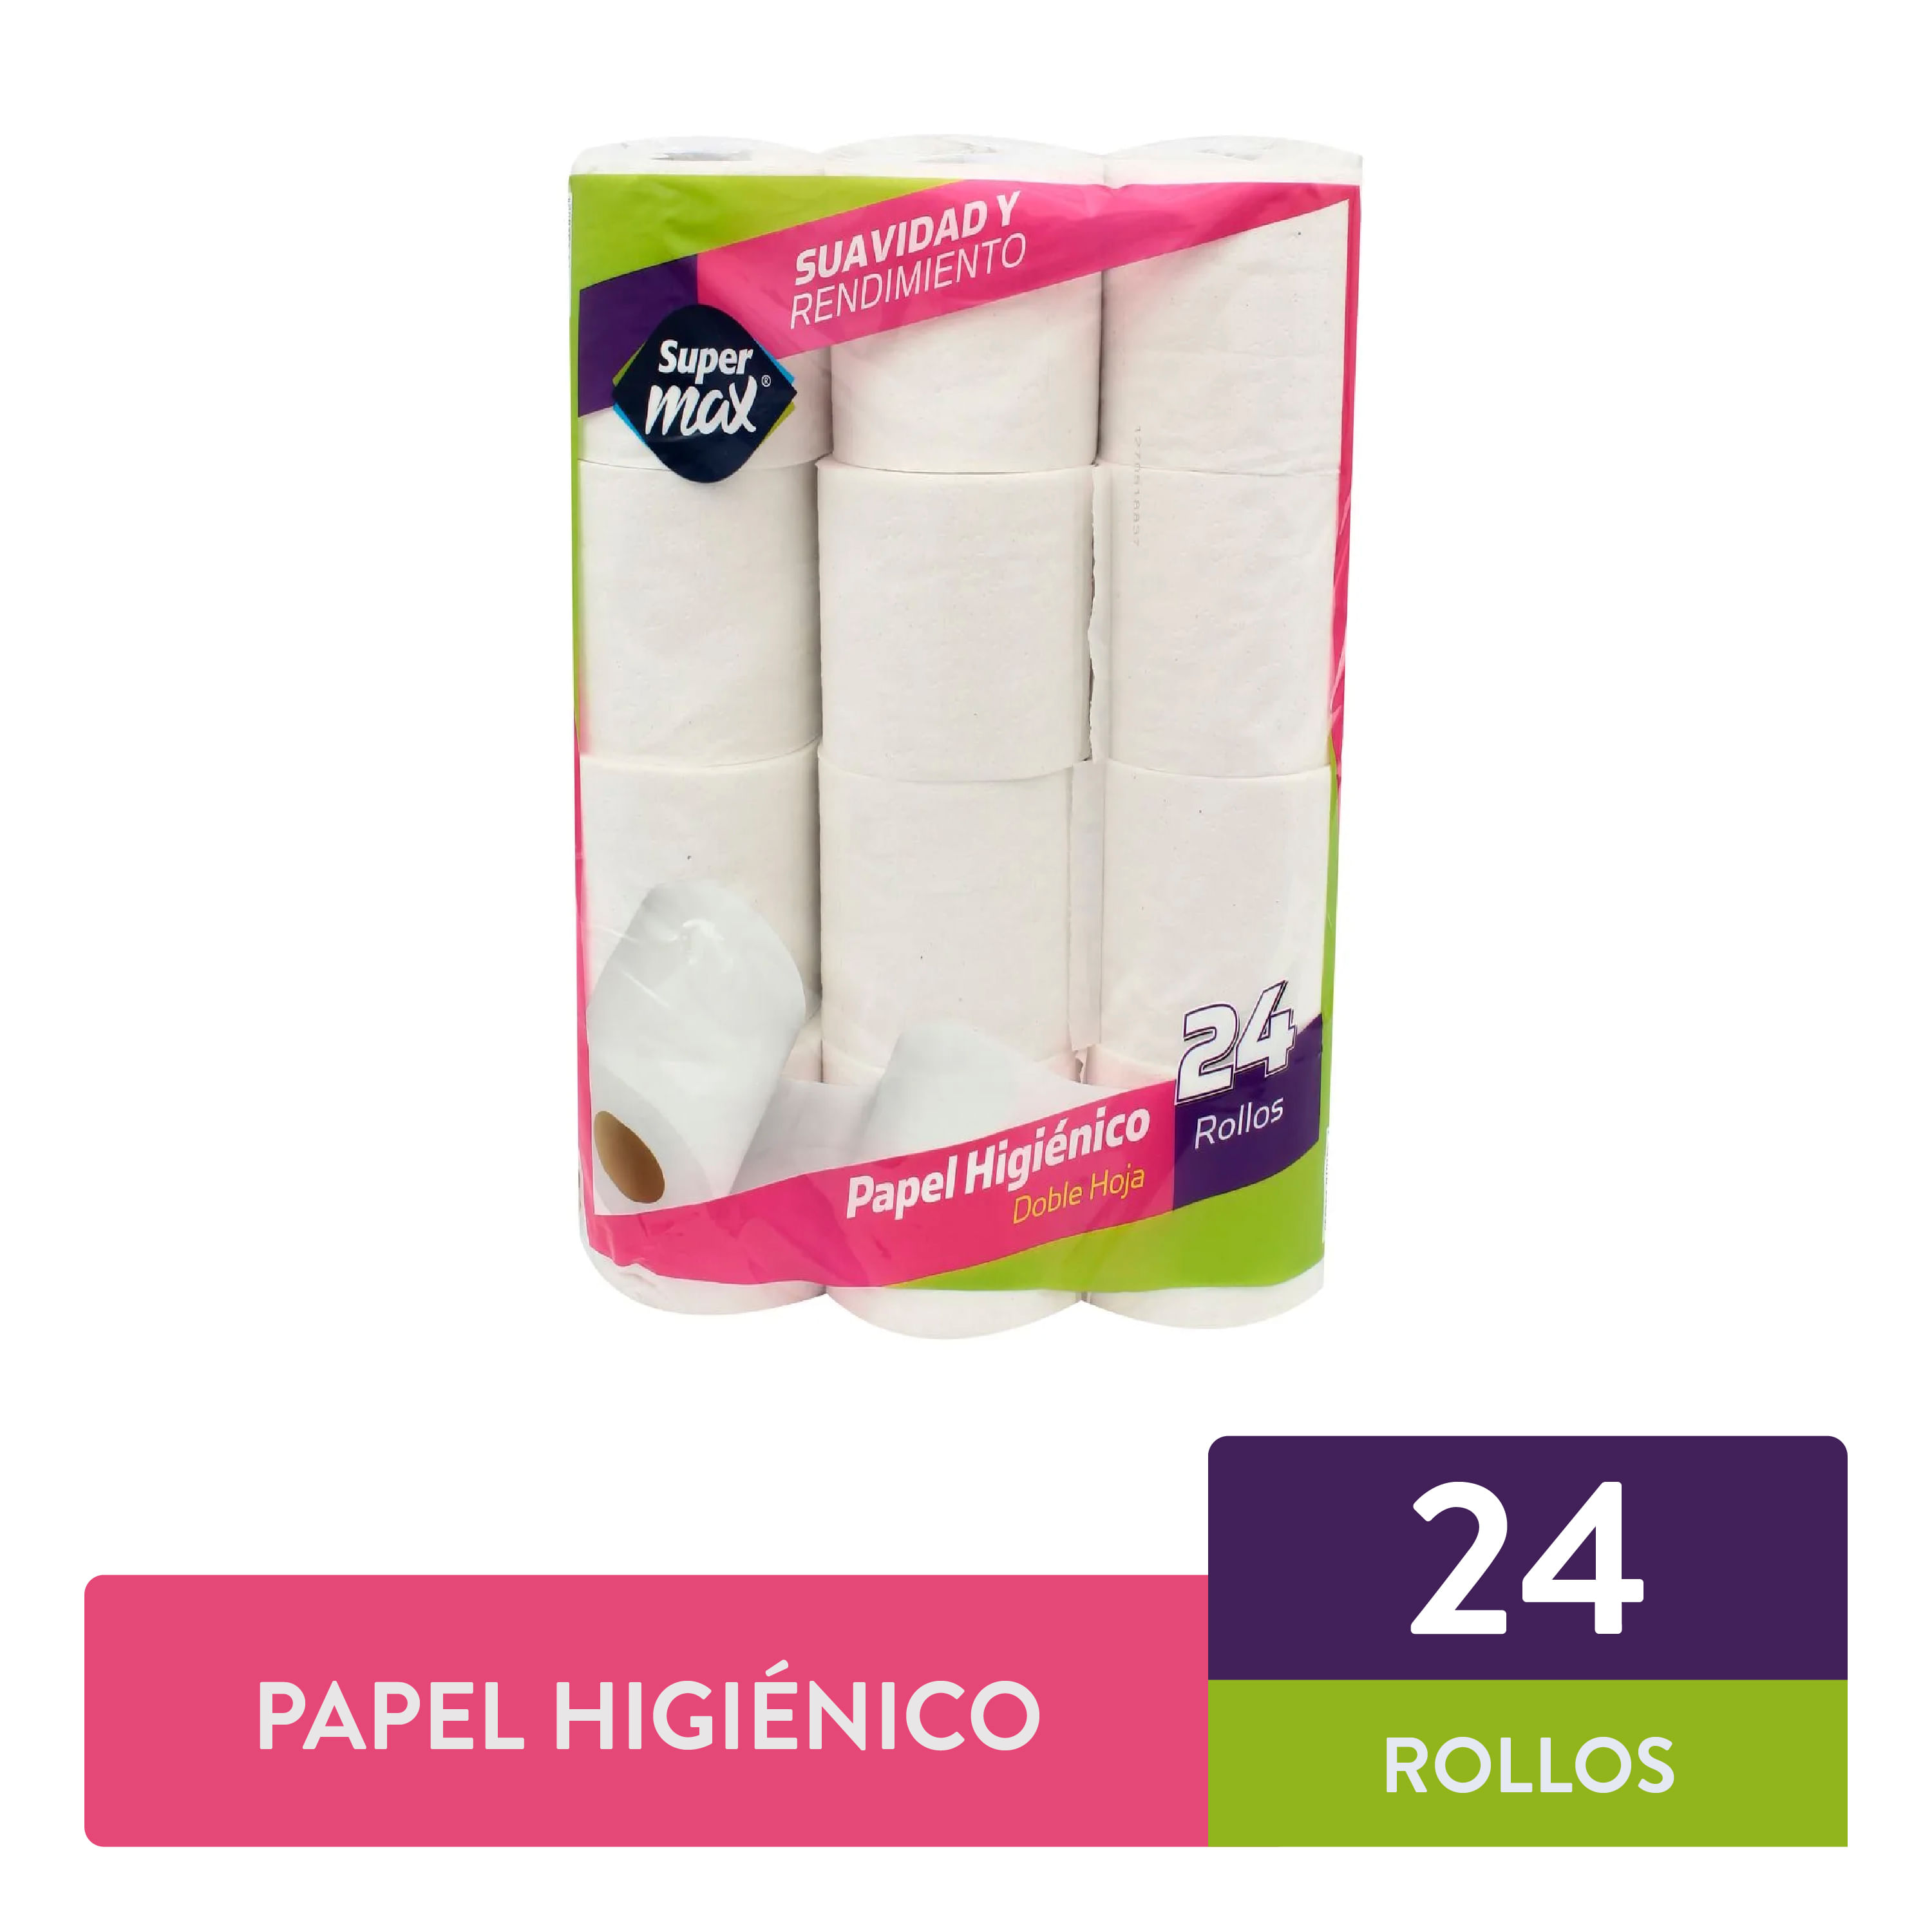 Papel higiénico 24 rollos dobles 3 capas 6,74 € - LIDL » Chollometro